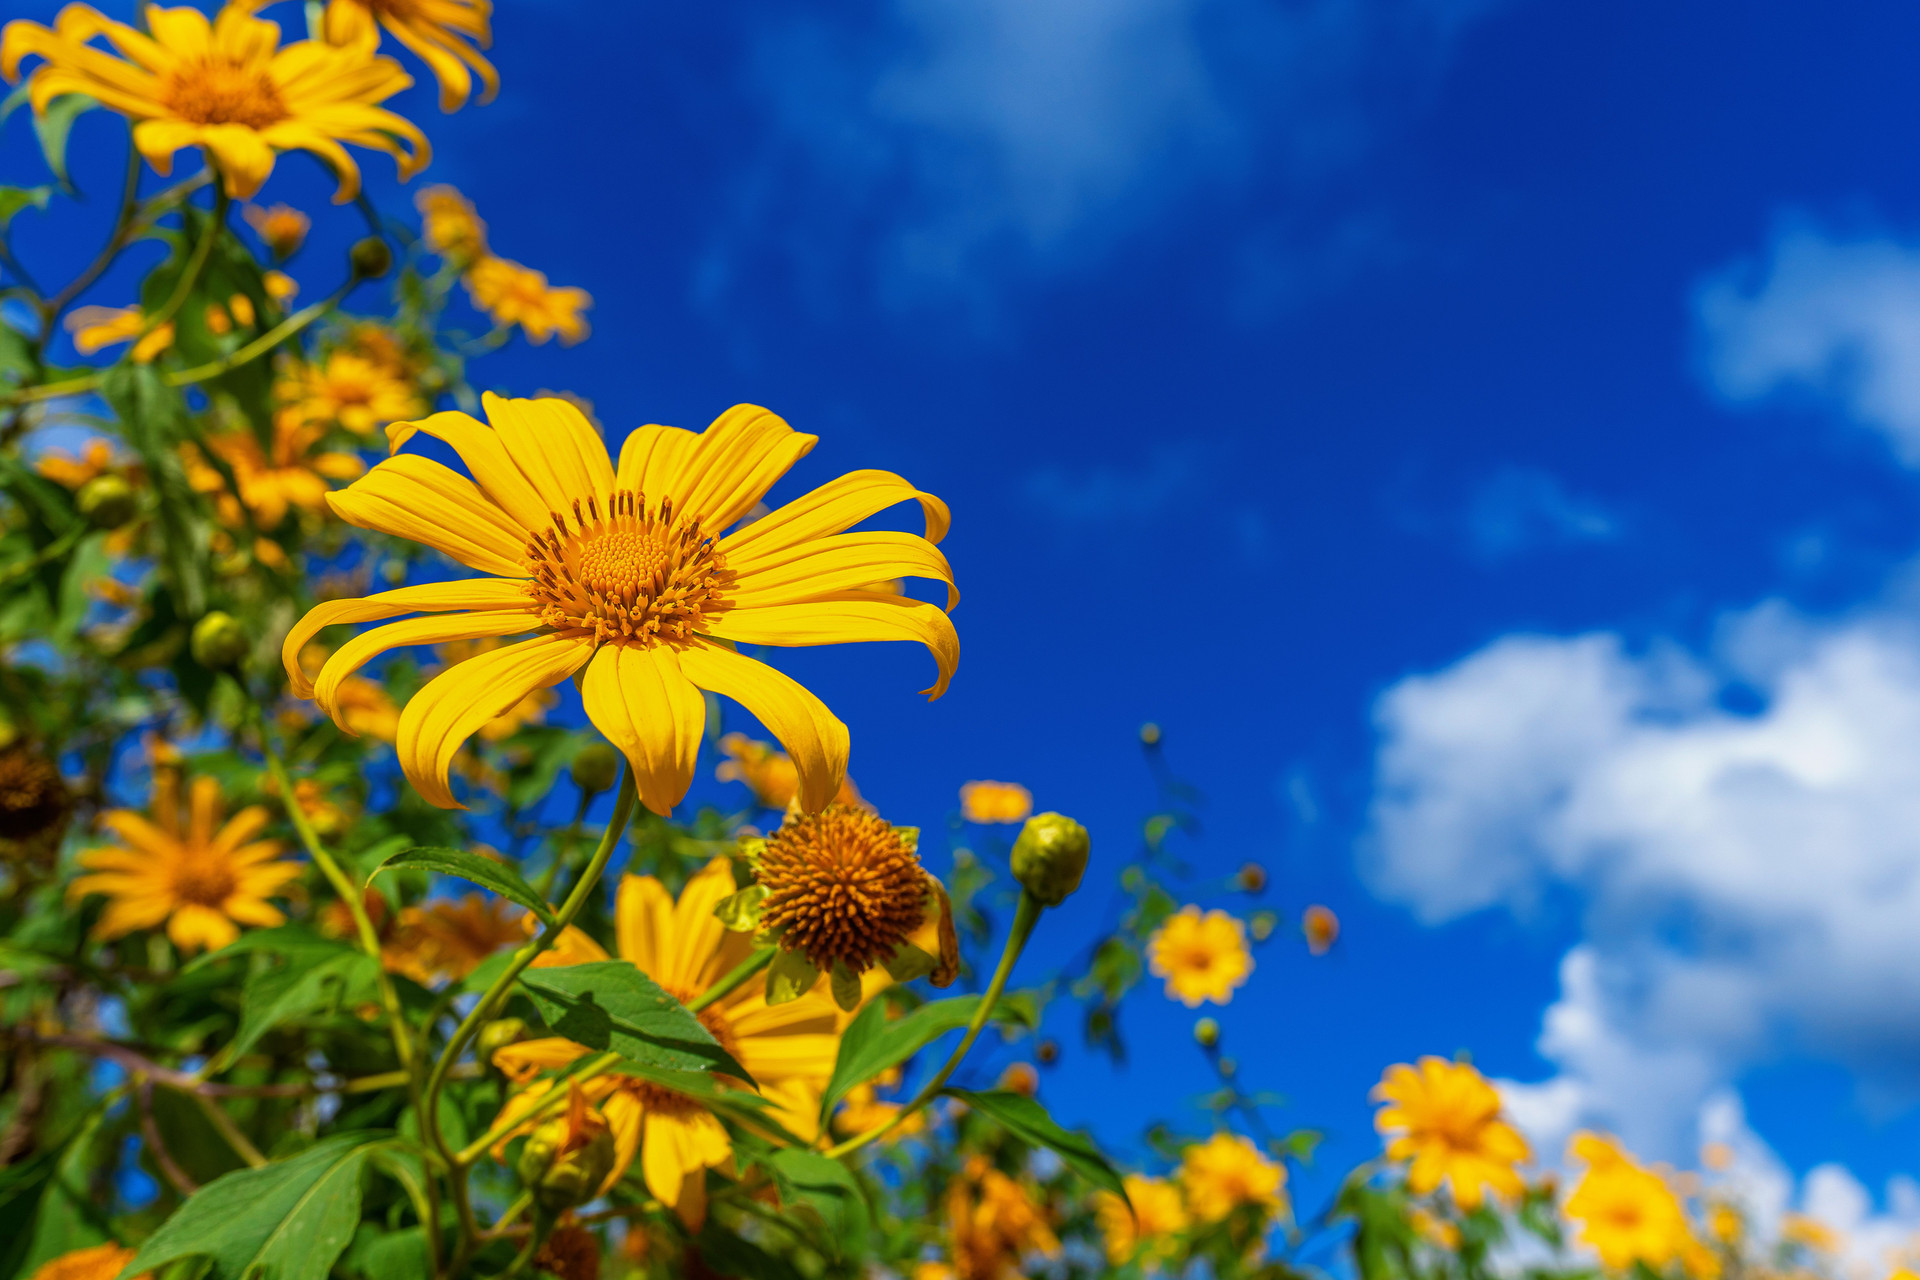 tree-marigold-mexican-flower-blooming-blue-sky-compressed.jpg